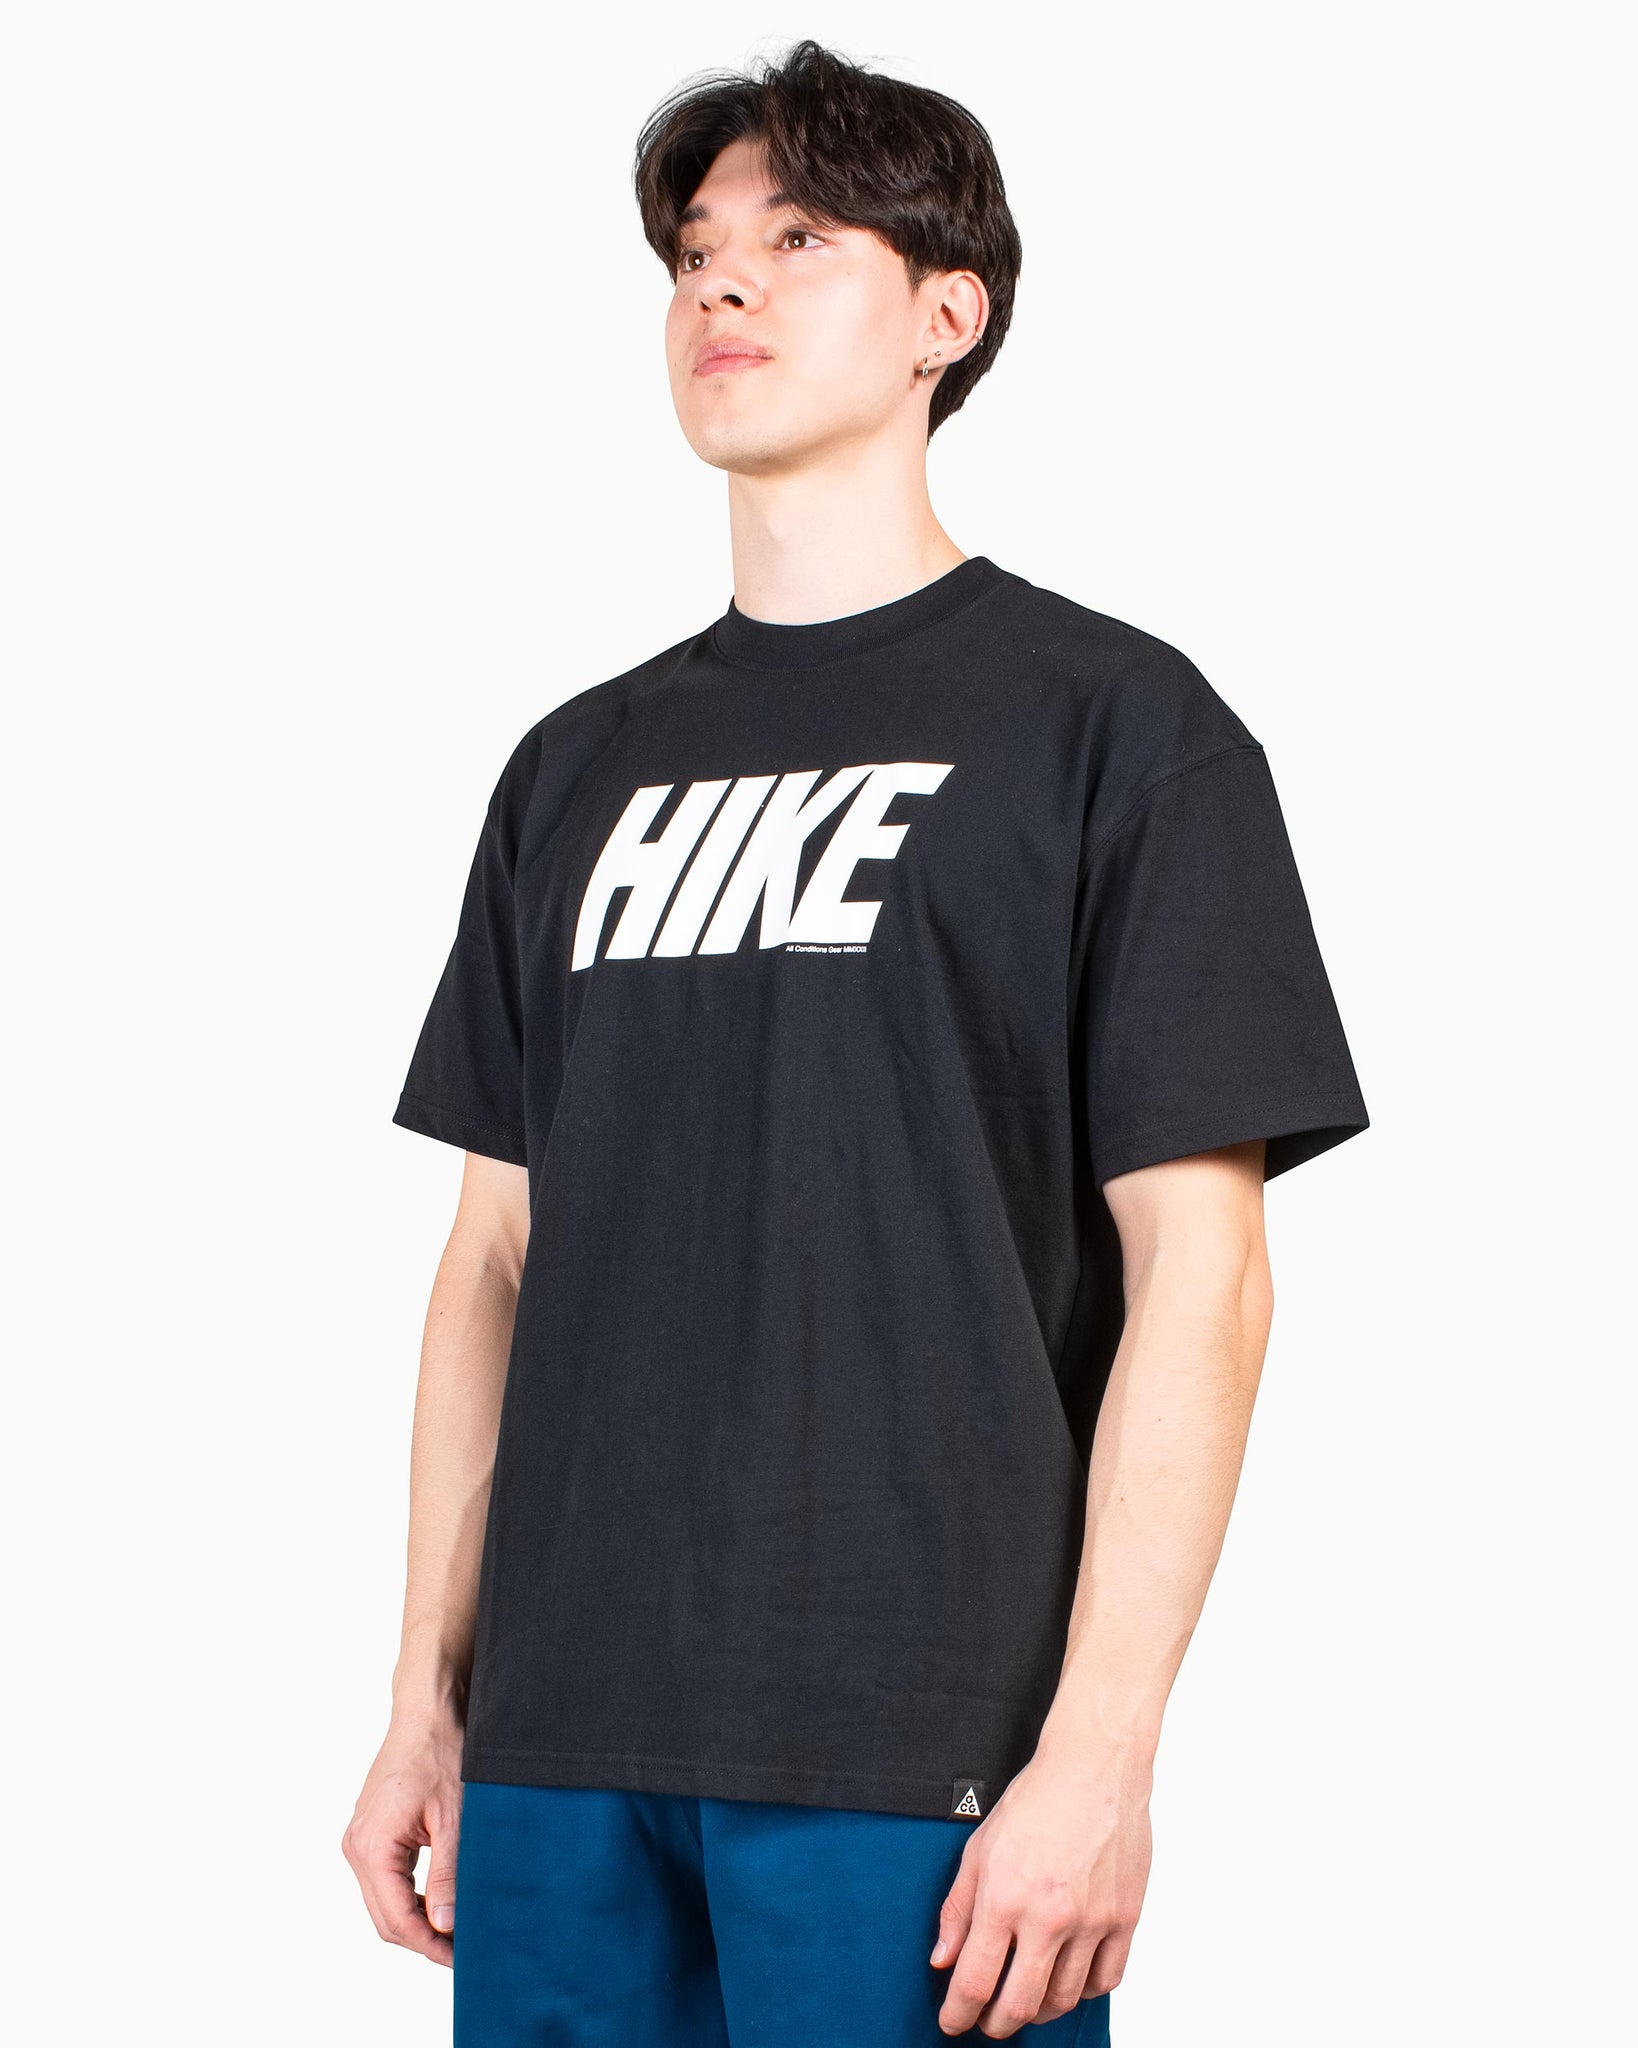 Nike ACG 'HIKE' T-Shirt Black Model Side